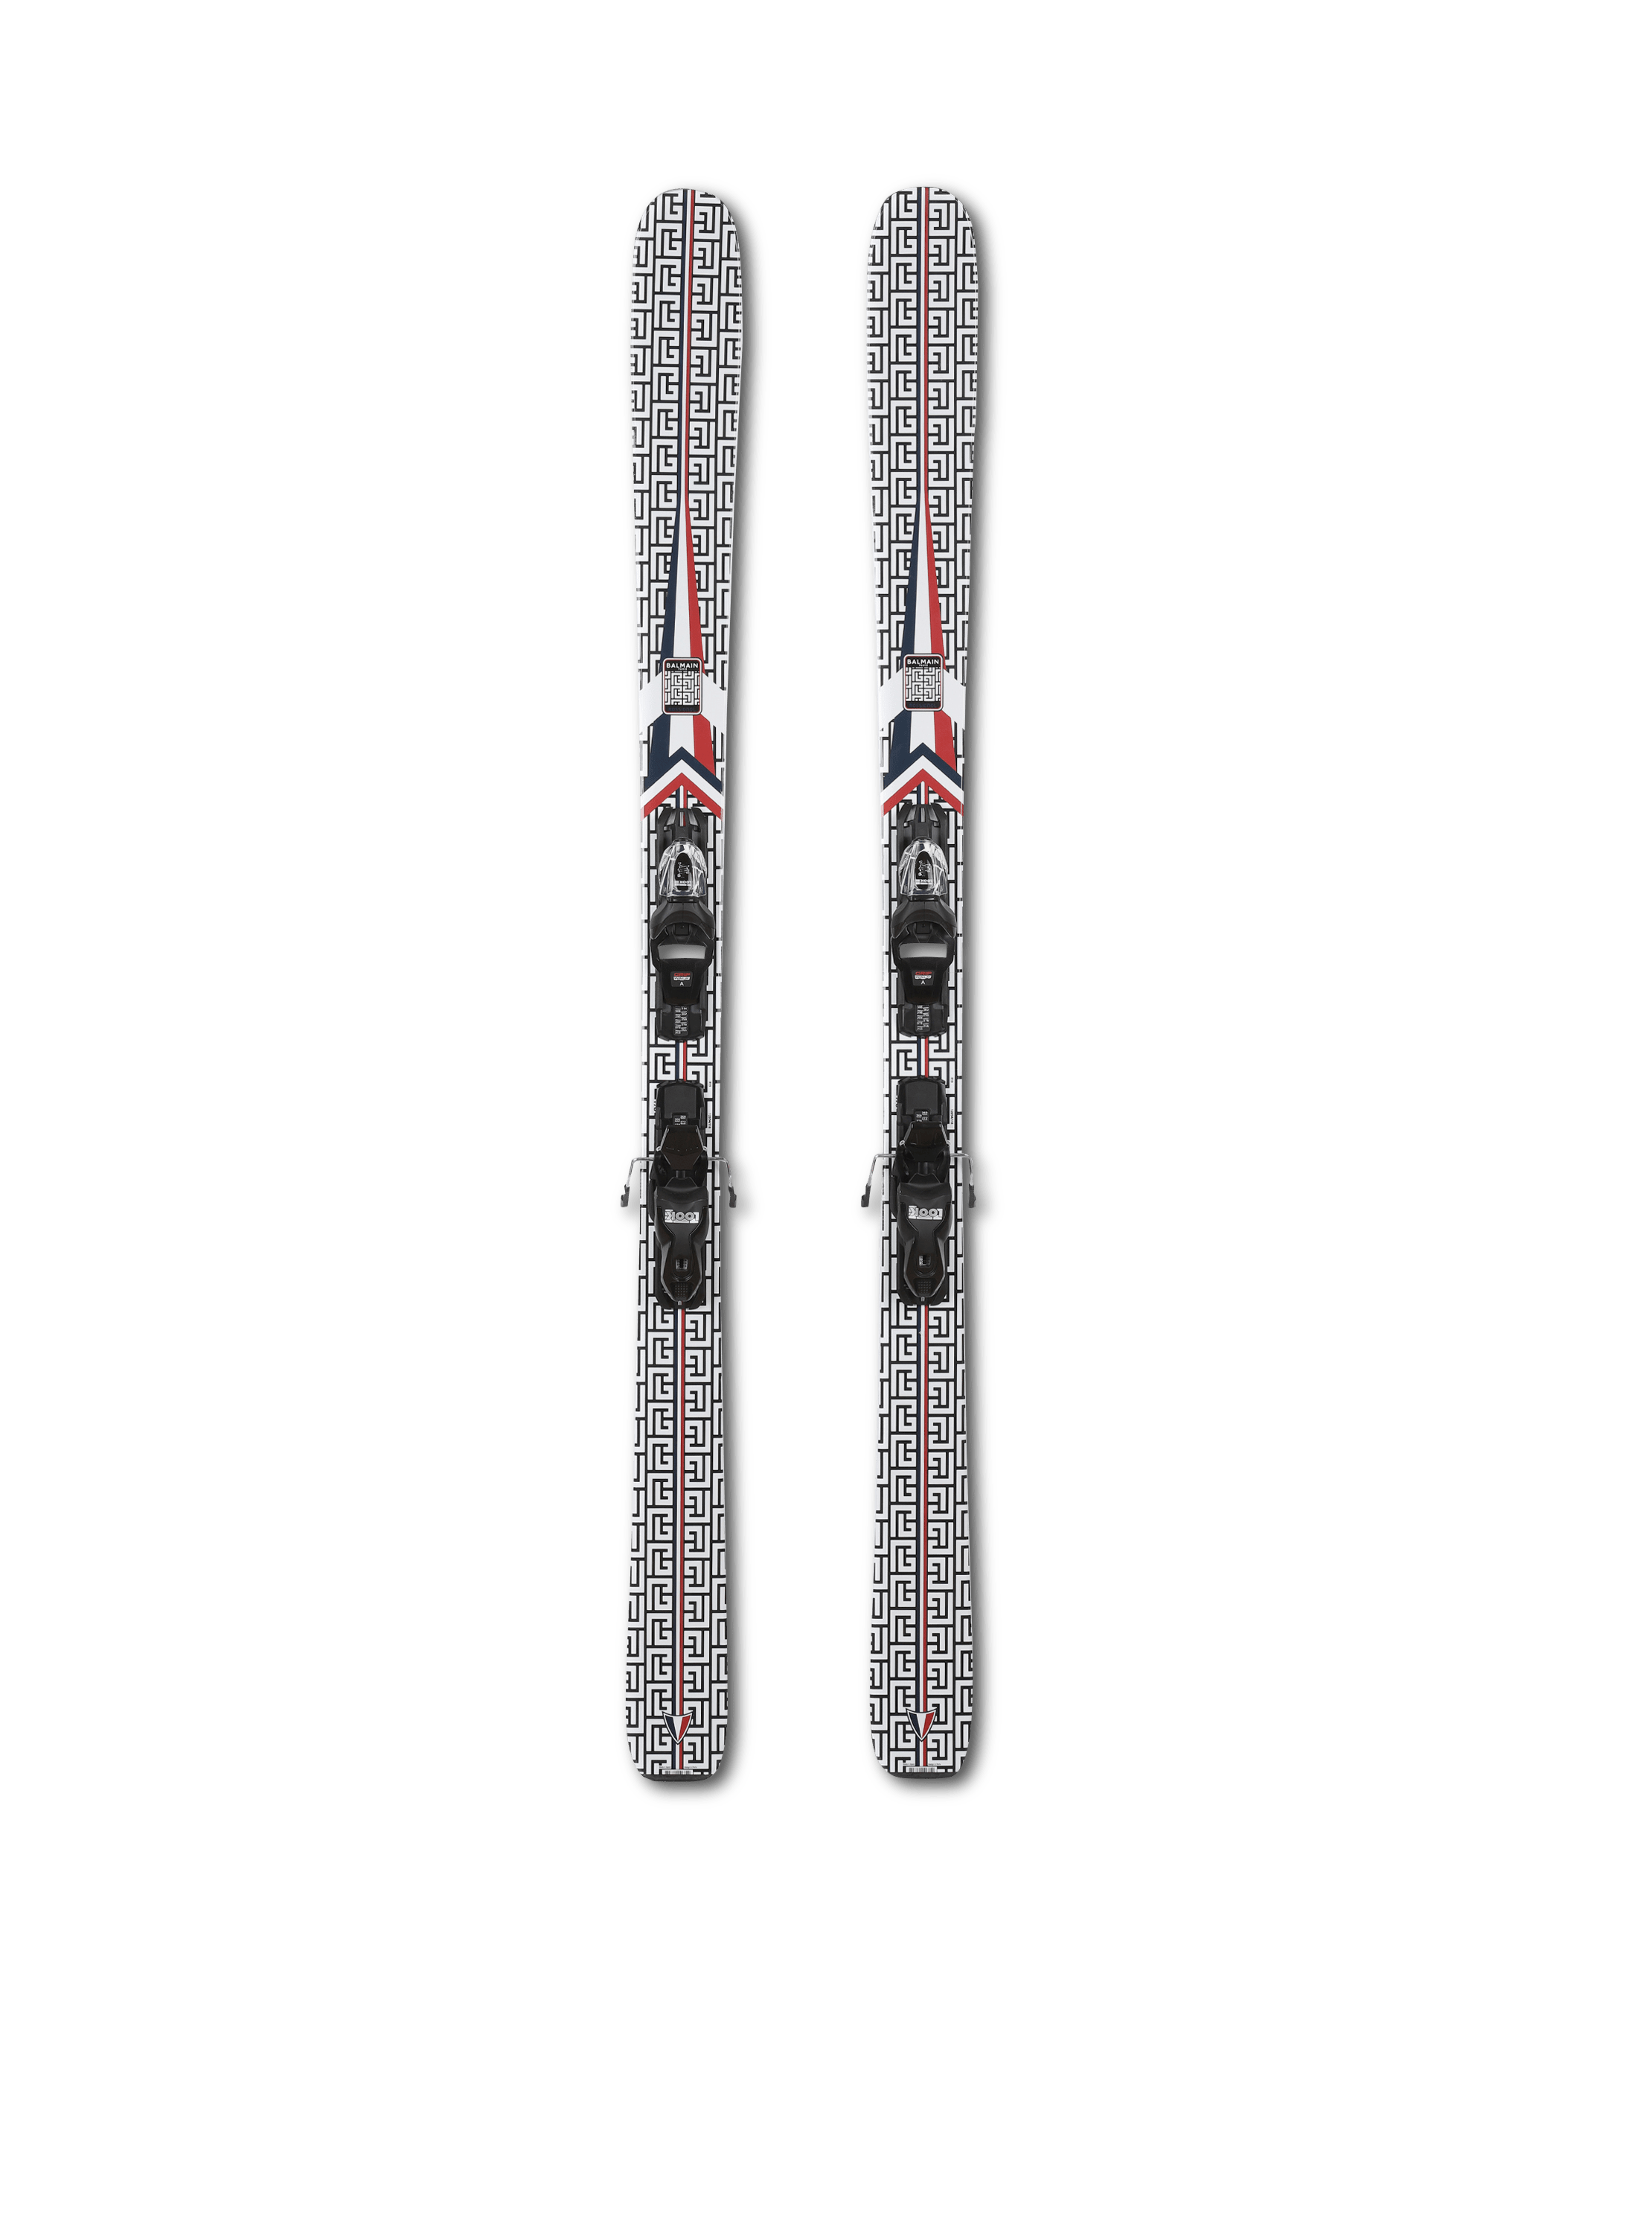 Balmain x Rossignol联名 - Rossignol Balmain字母标识图案滑木质滑雪双板